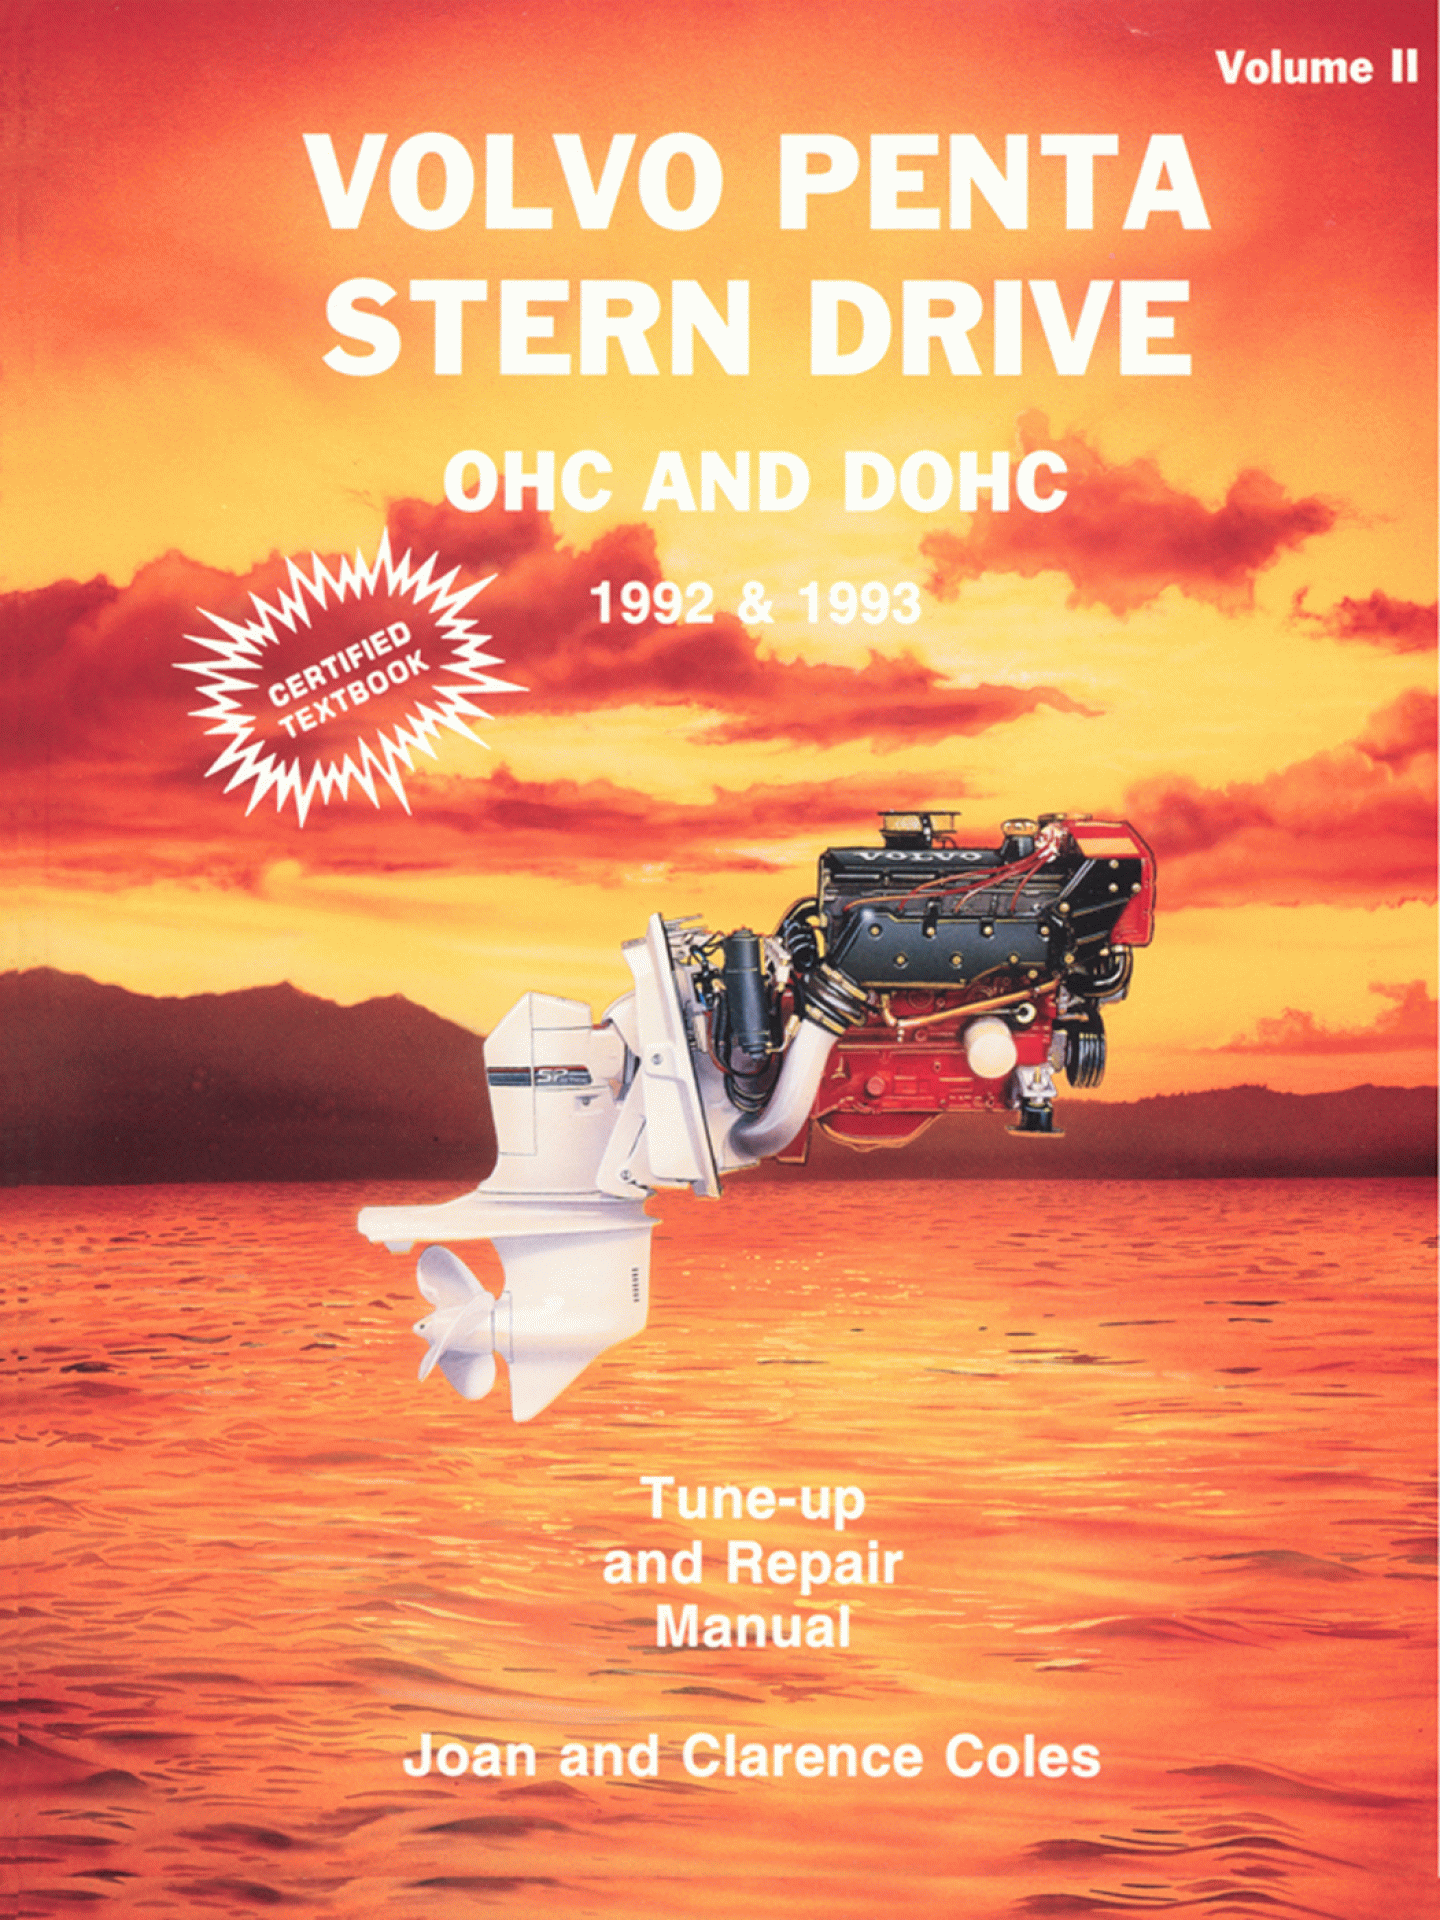 SELOC PUBLISHING | 18-03602 | REPAIR MANUAL Volvo Penta Stern Drive ll OHC & DOHC 1992-93